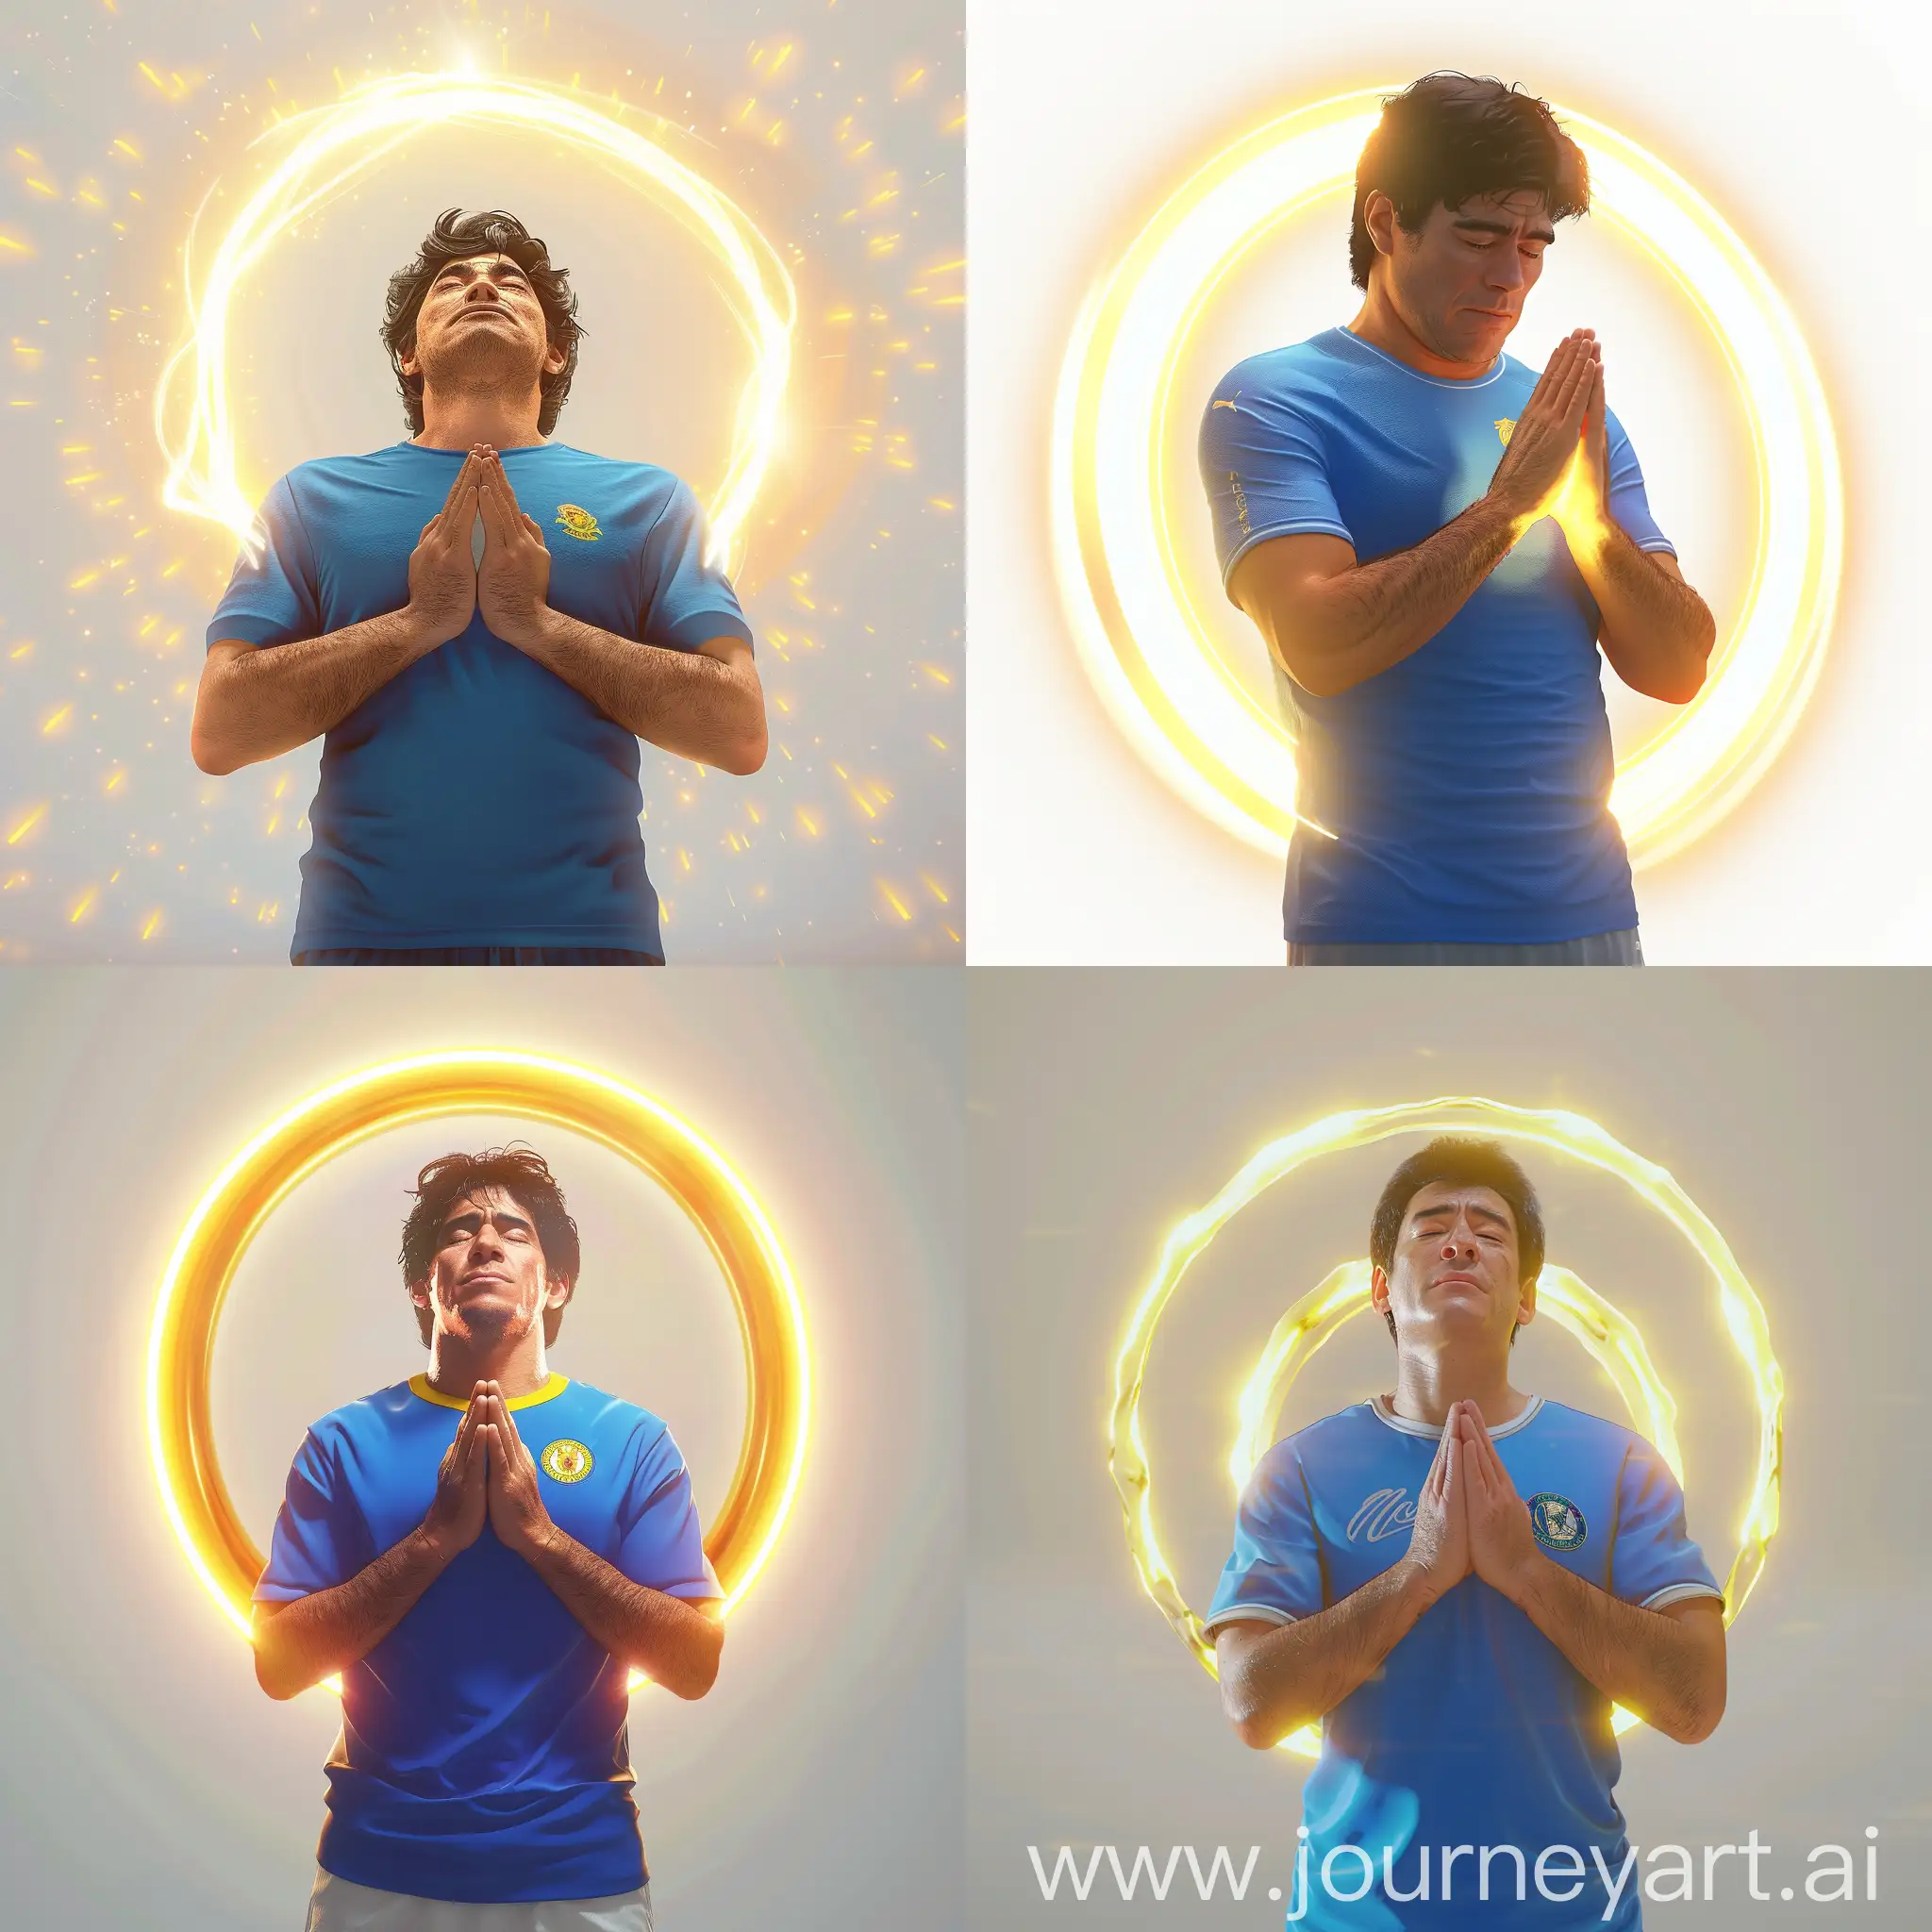 Maradona-Praying-Cartoon-Iconic-Tribute-in-Blue-Shirt-with-Yellow-Halo